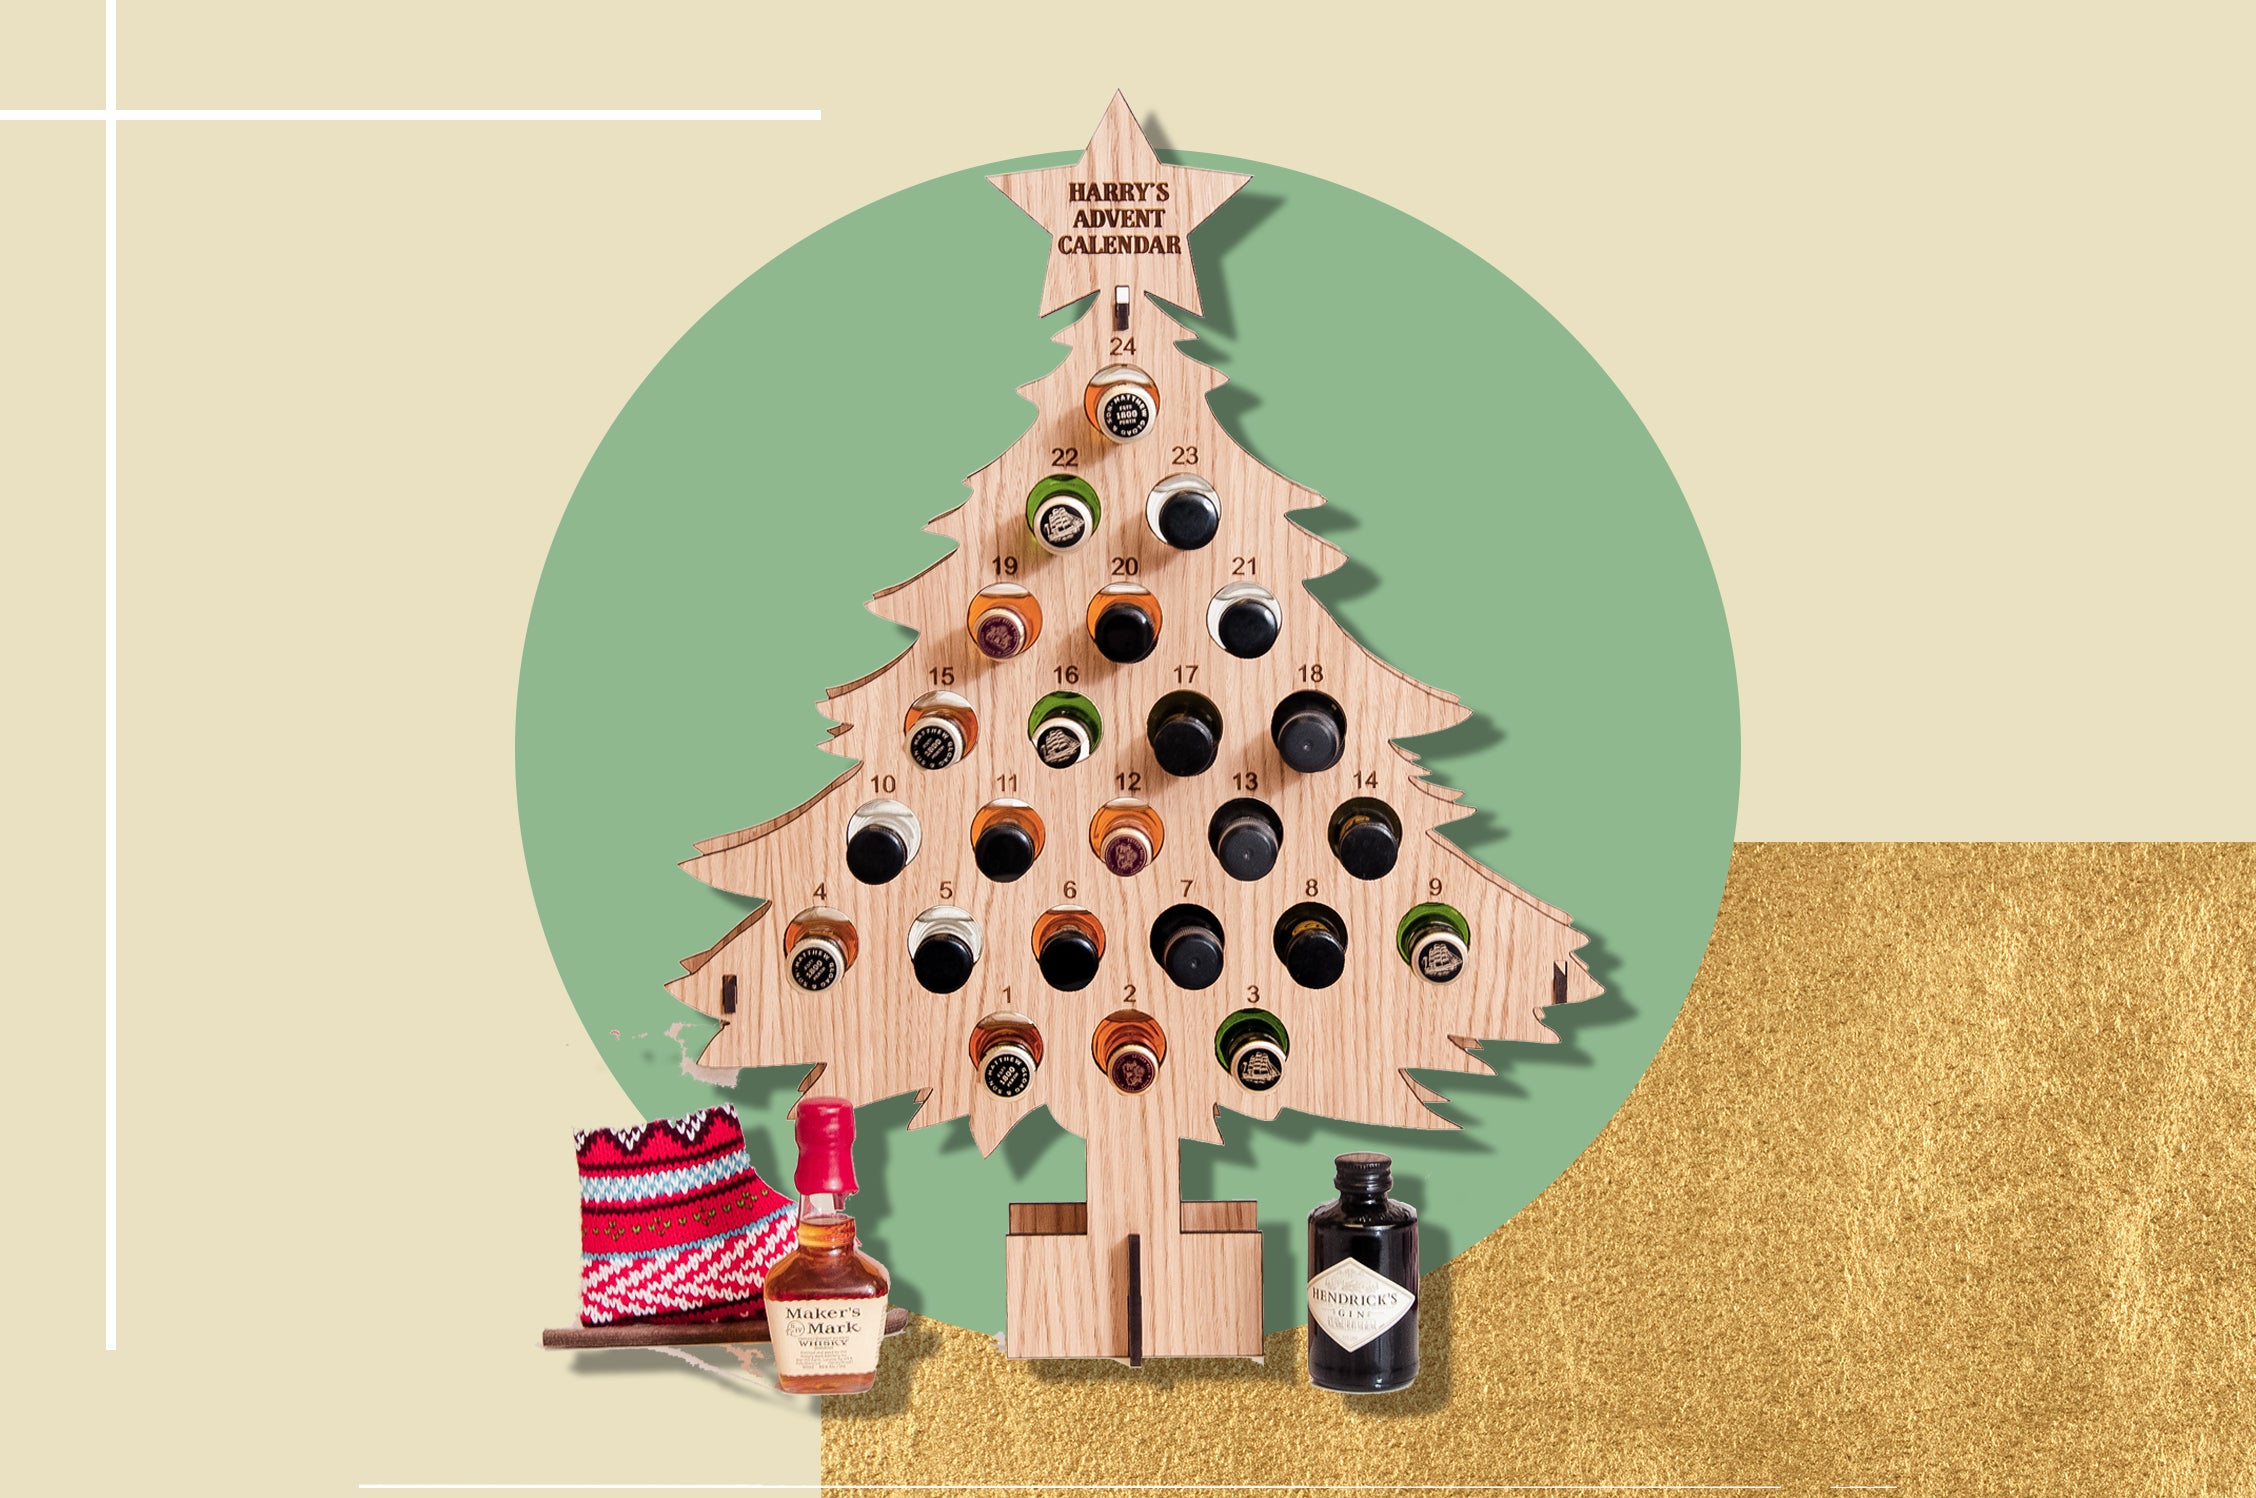 Aside from the whisky inside, we considered how gift-worthy each calendar felt